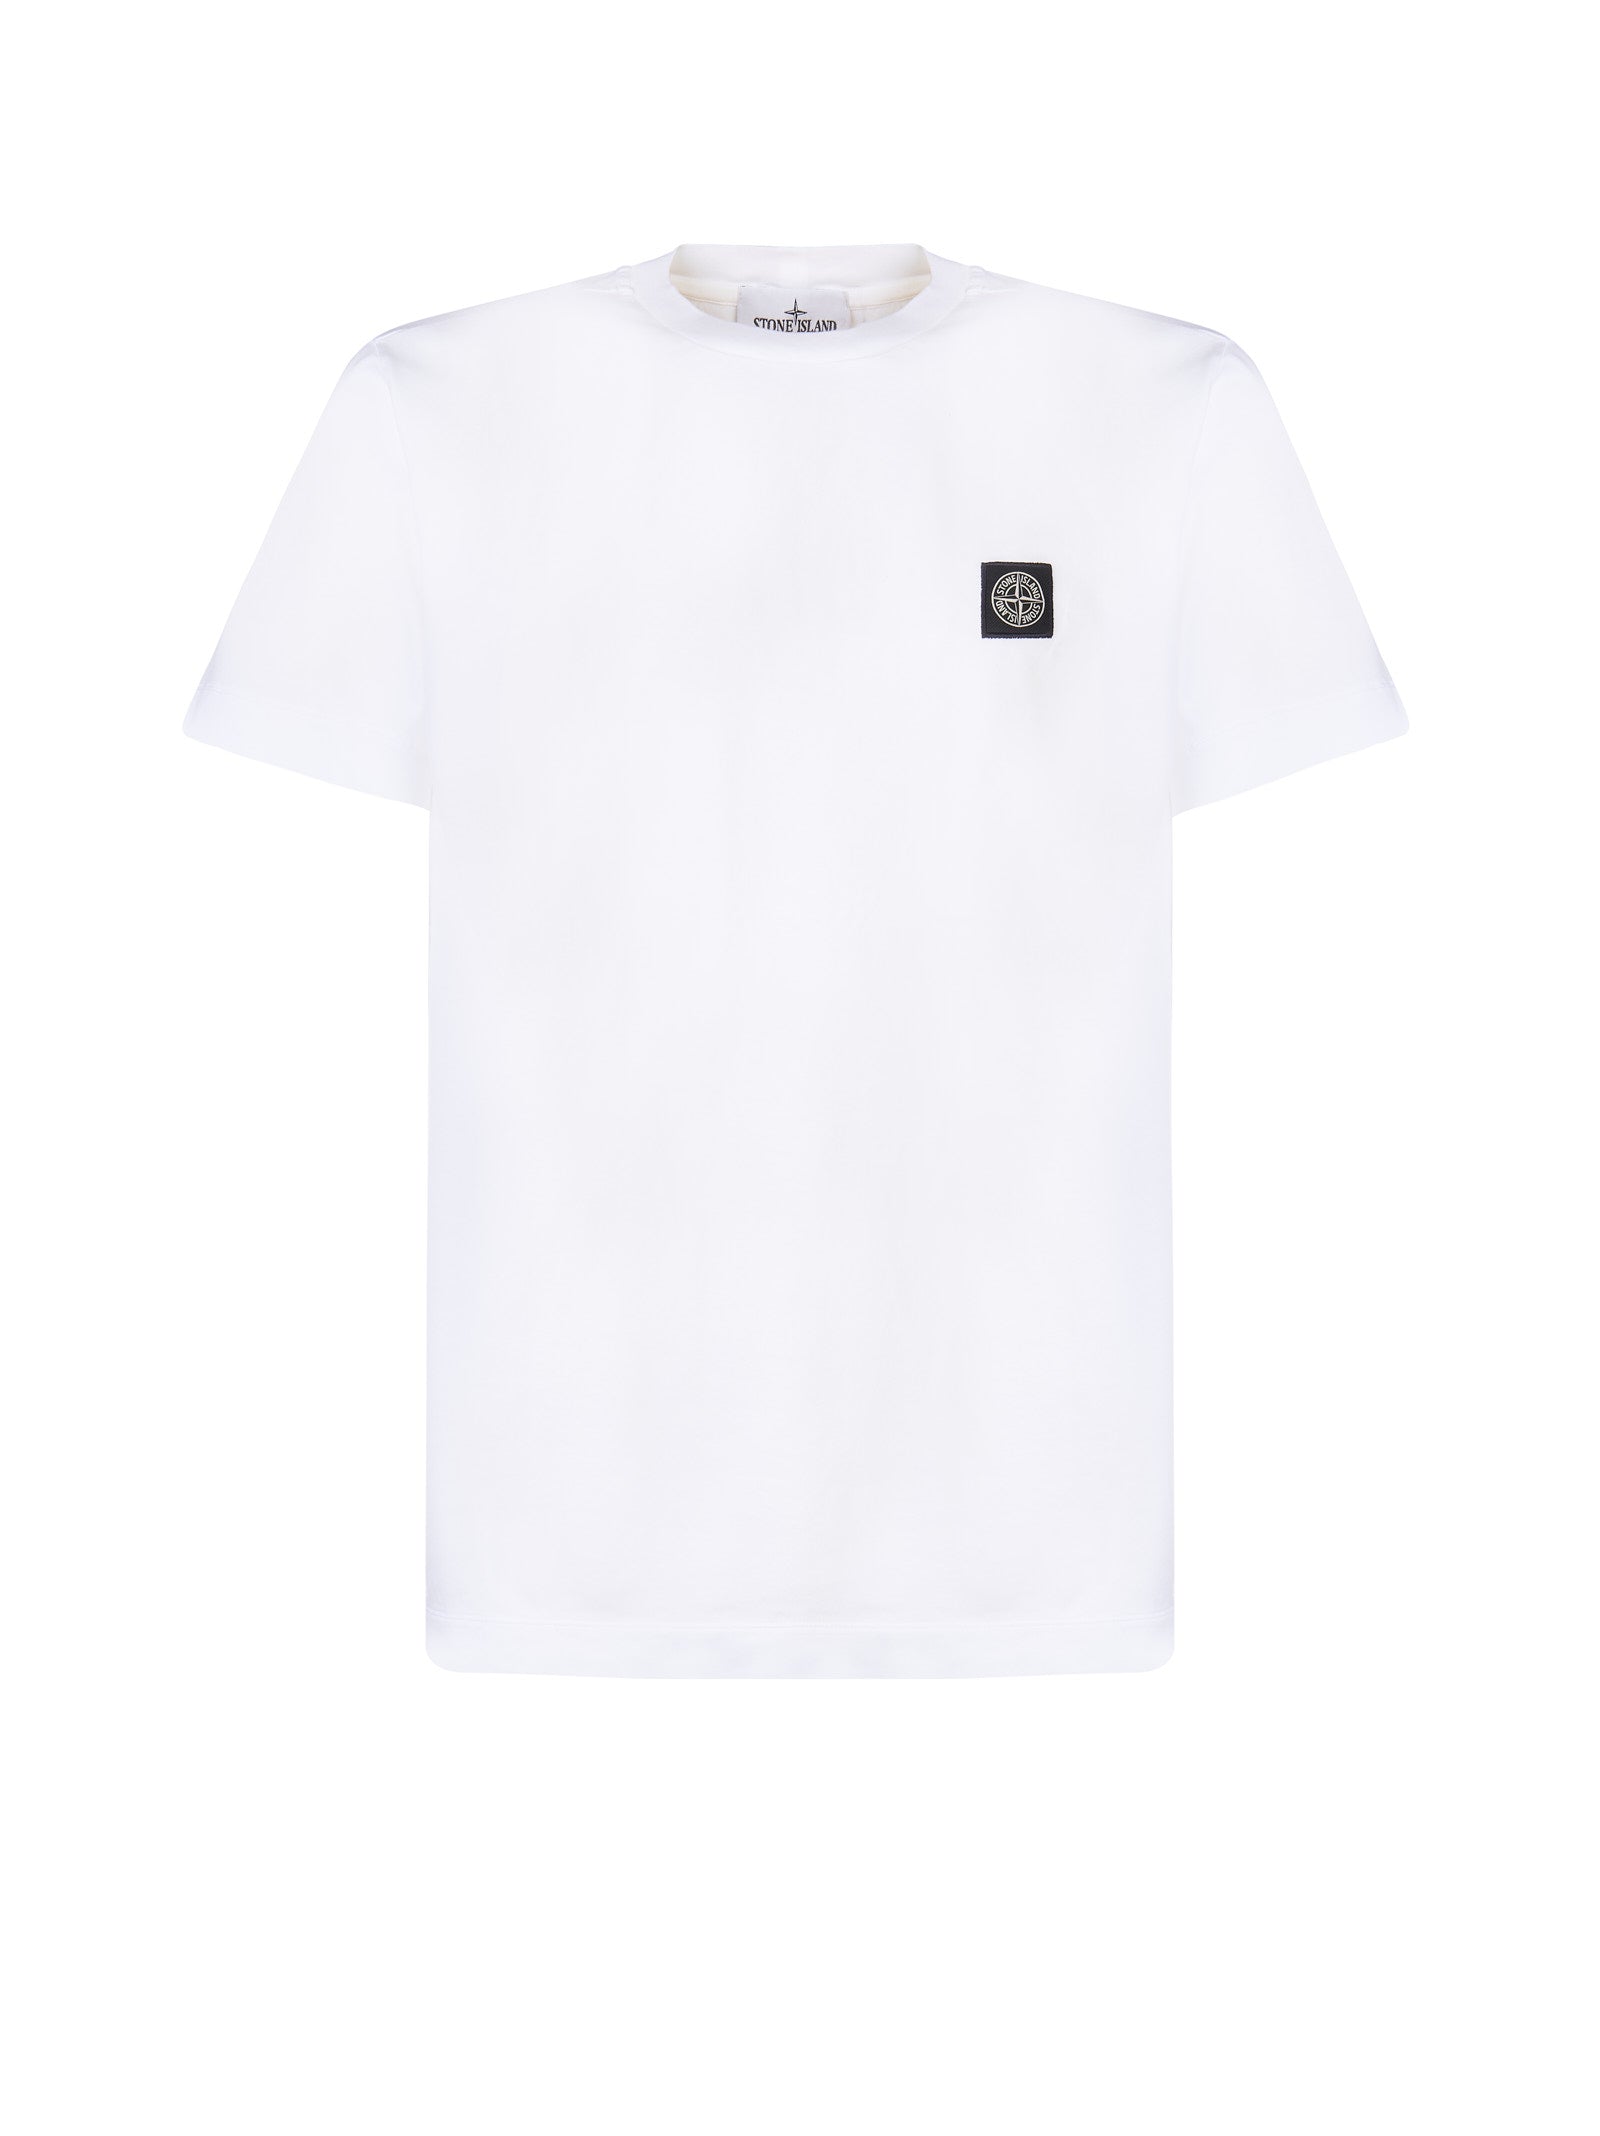 T-shirt STONE ISLAND
White